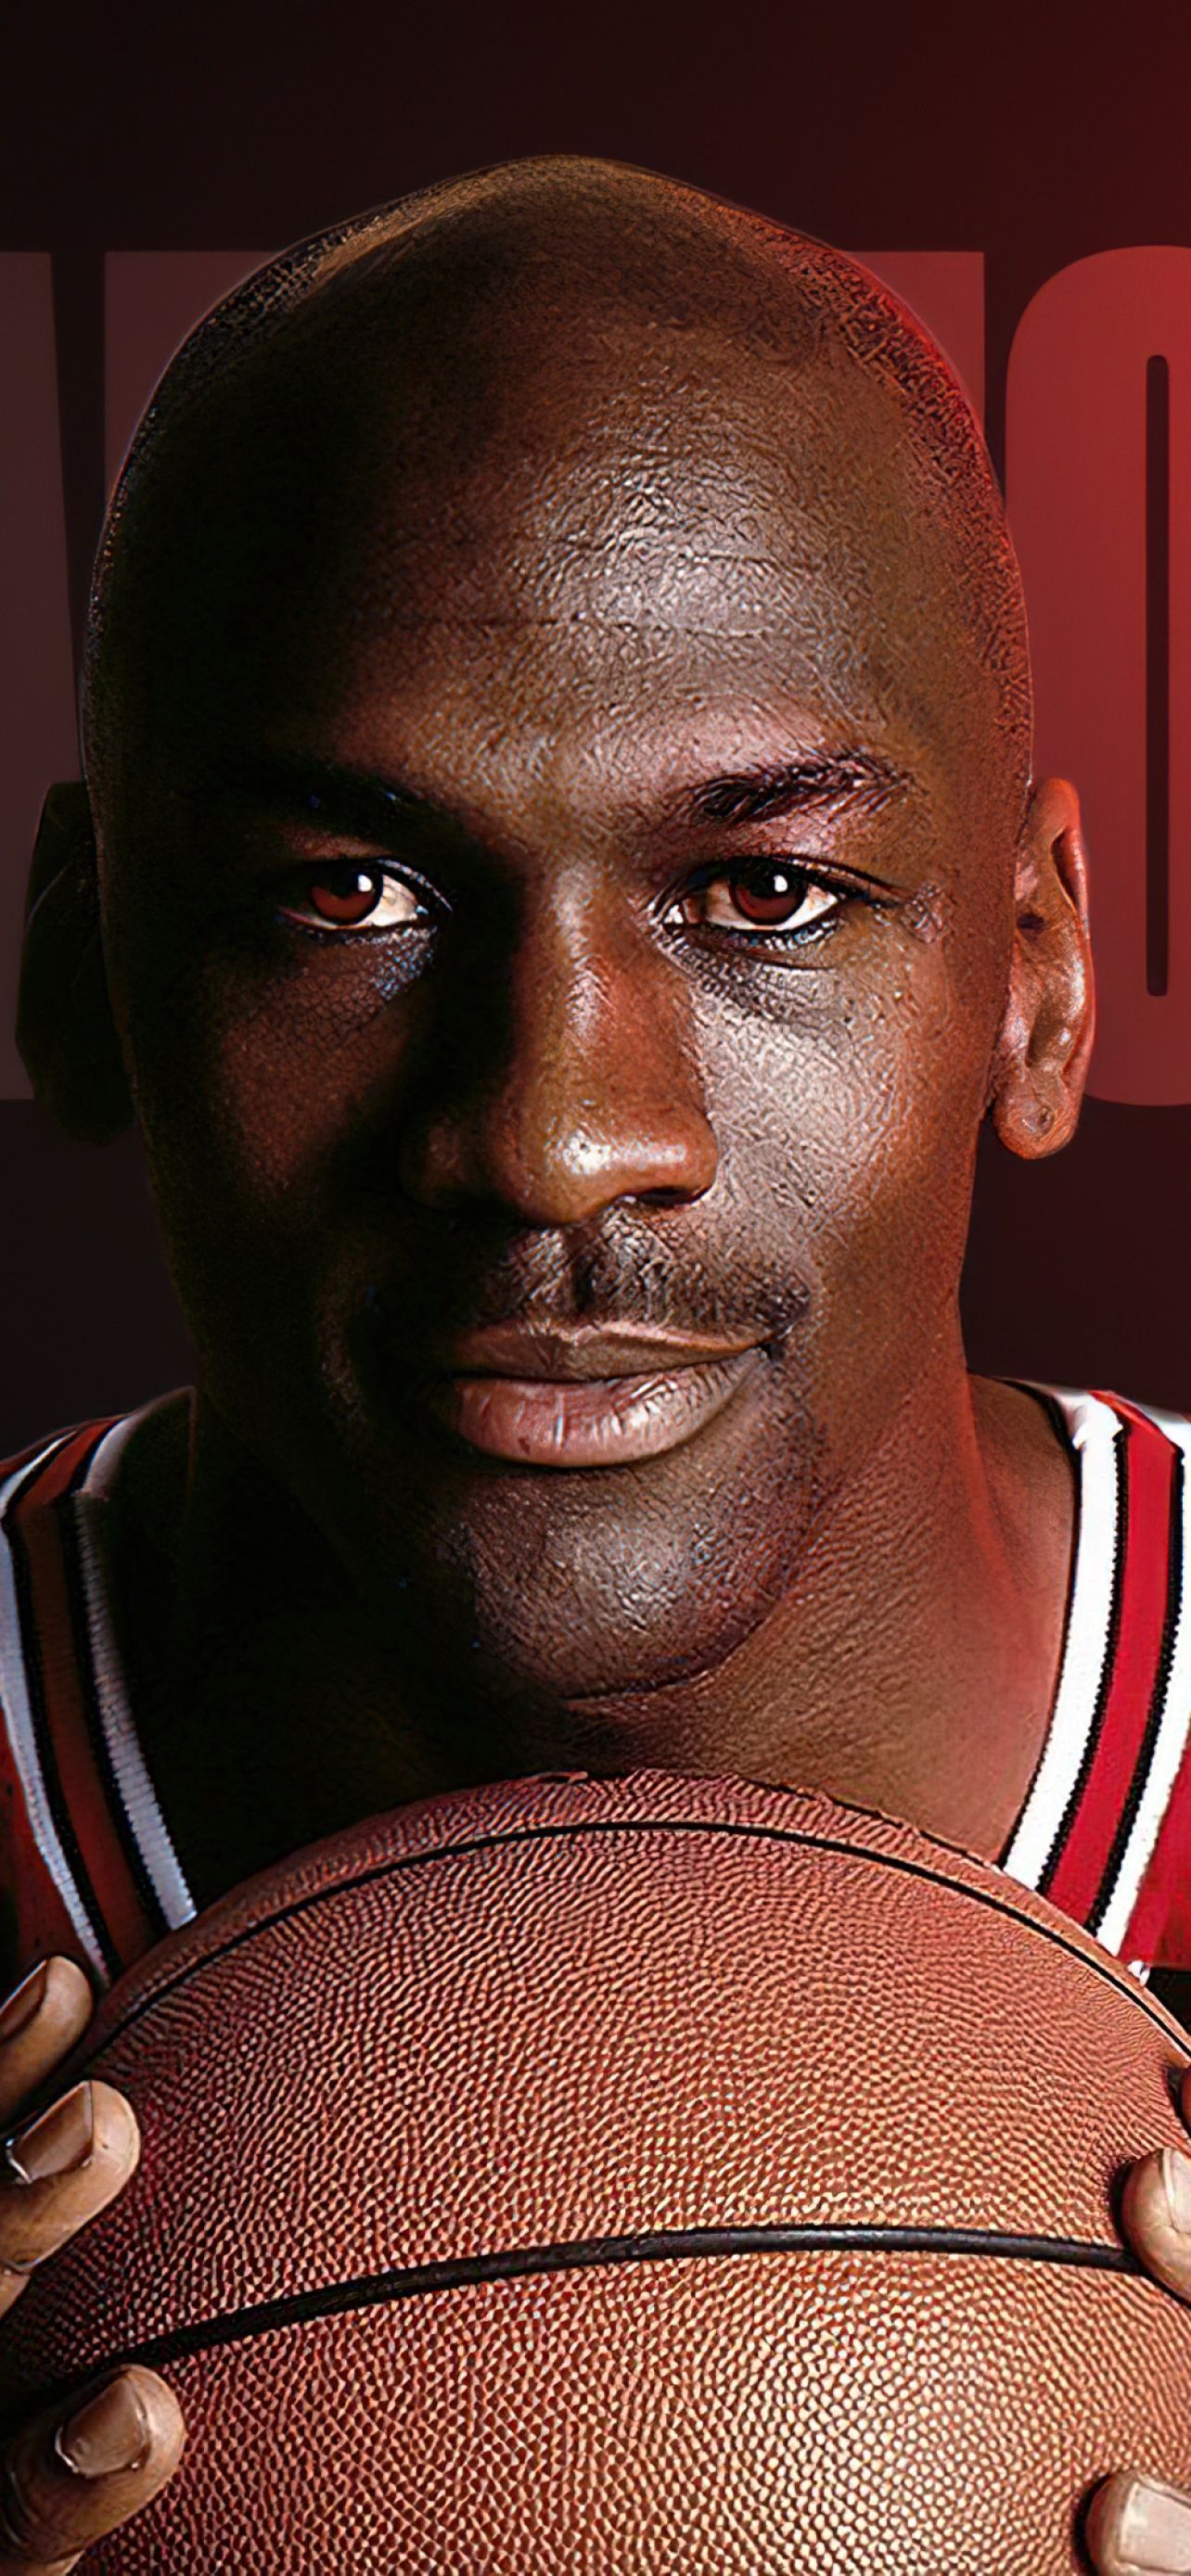 1440x2560 wallpaper of Michael Jordan holding a basketball - Michael Jordan